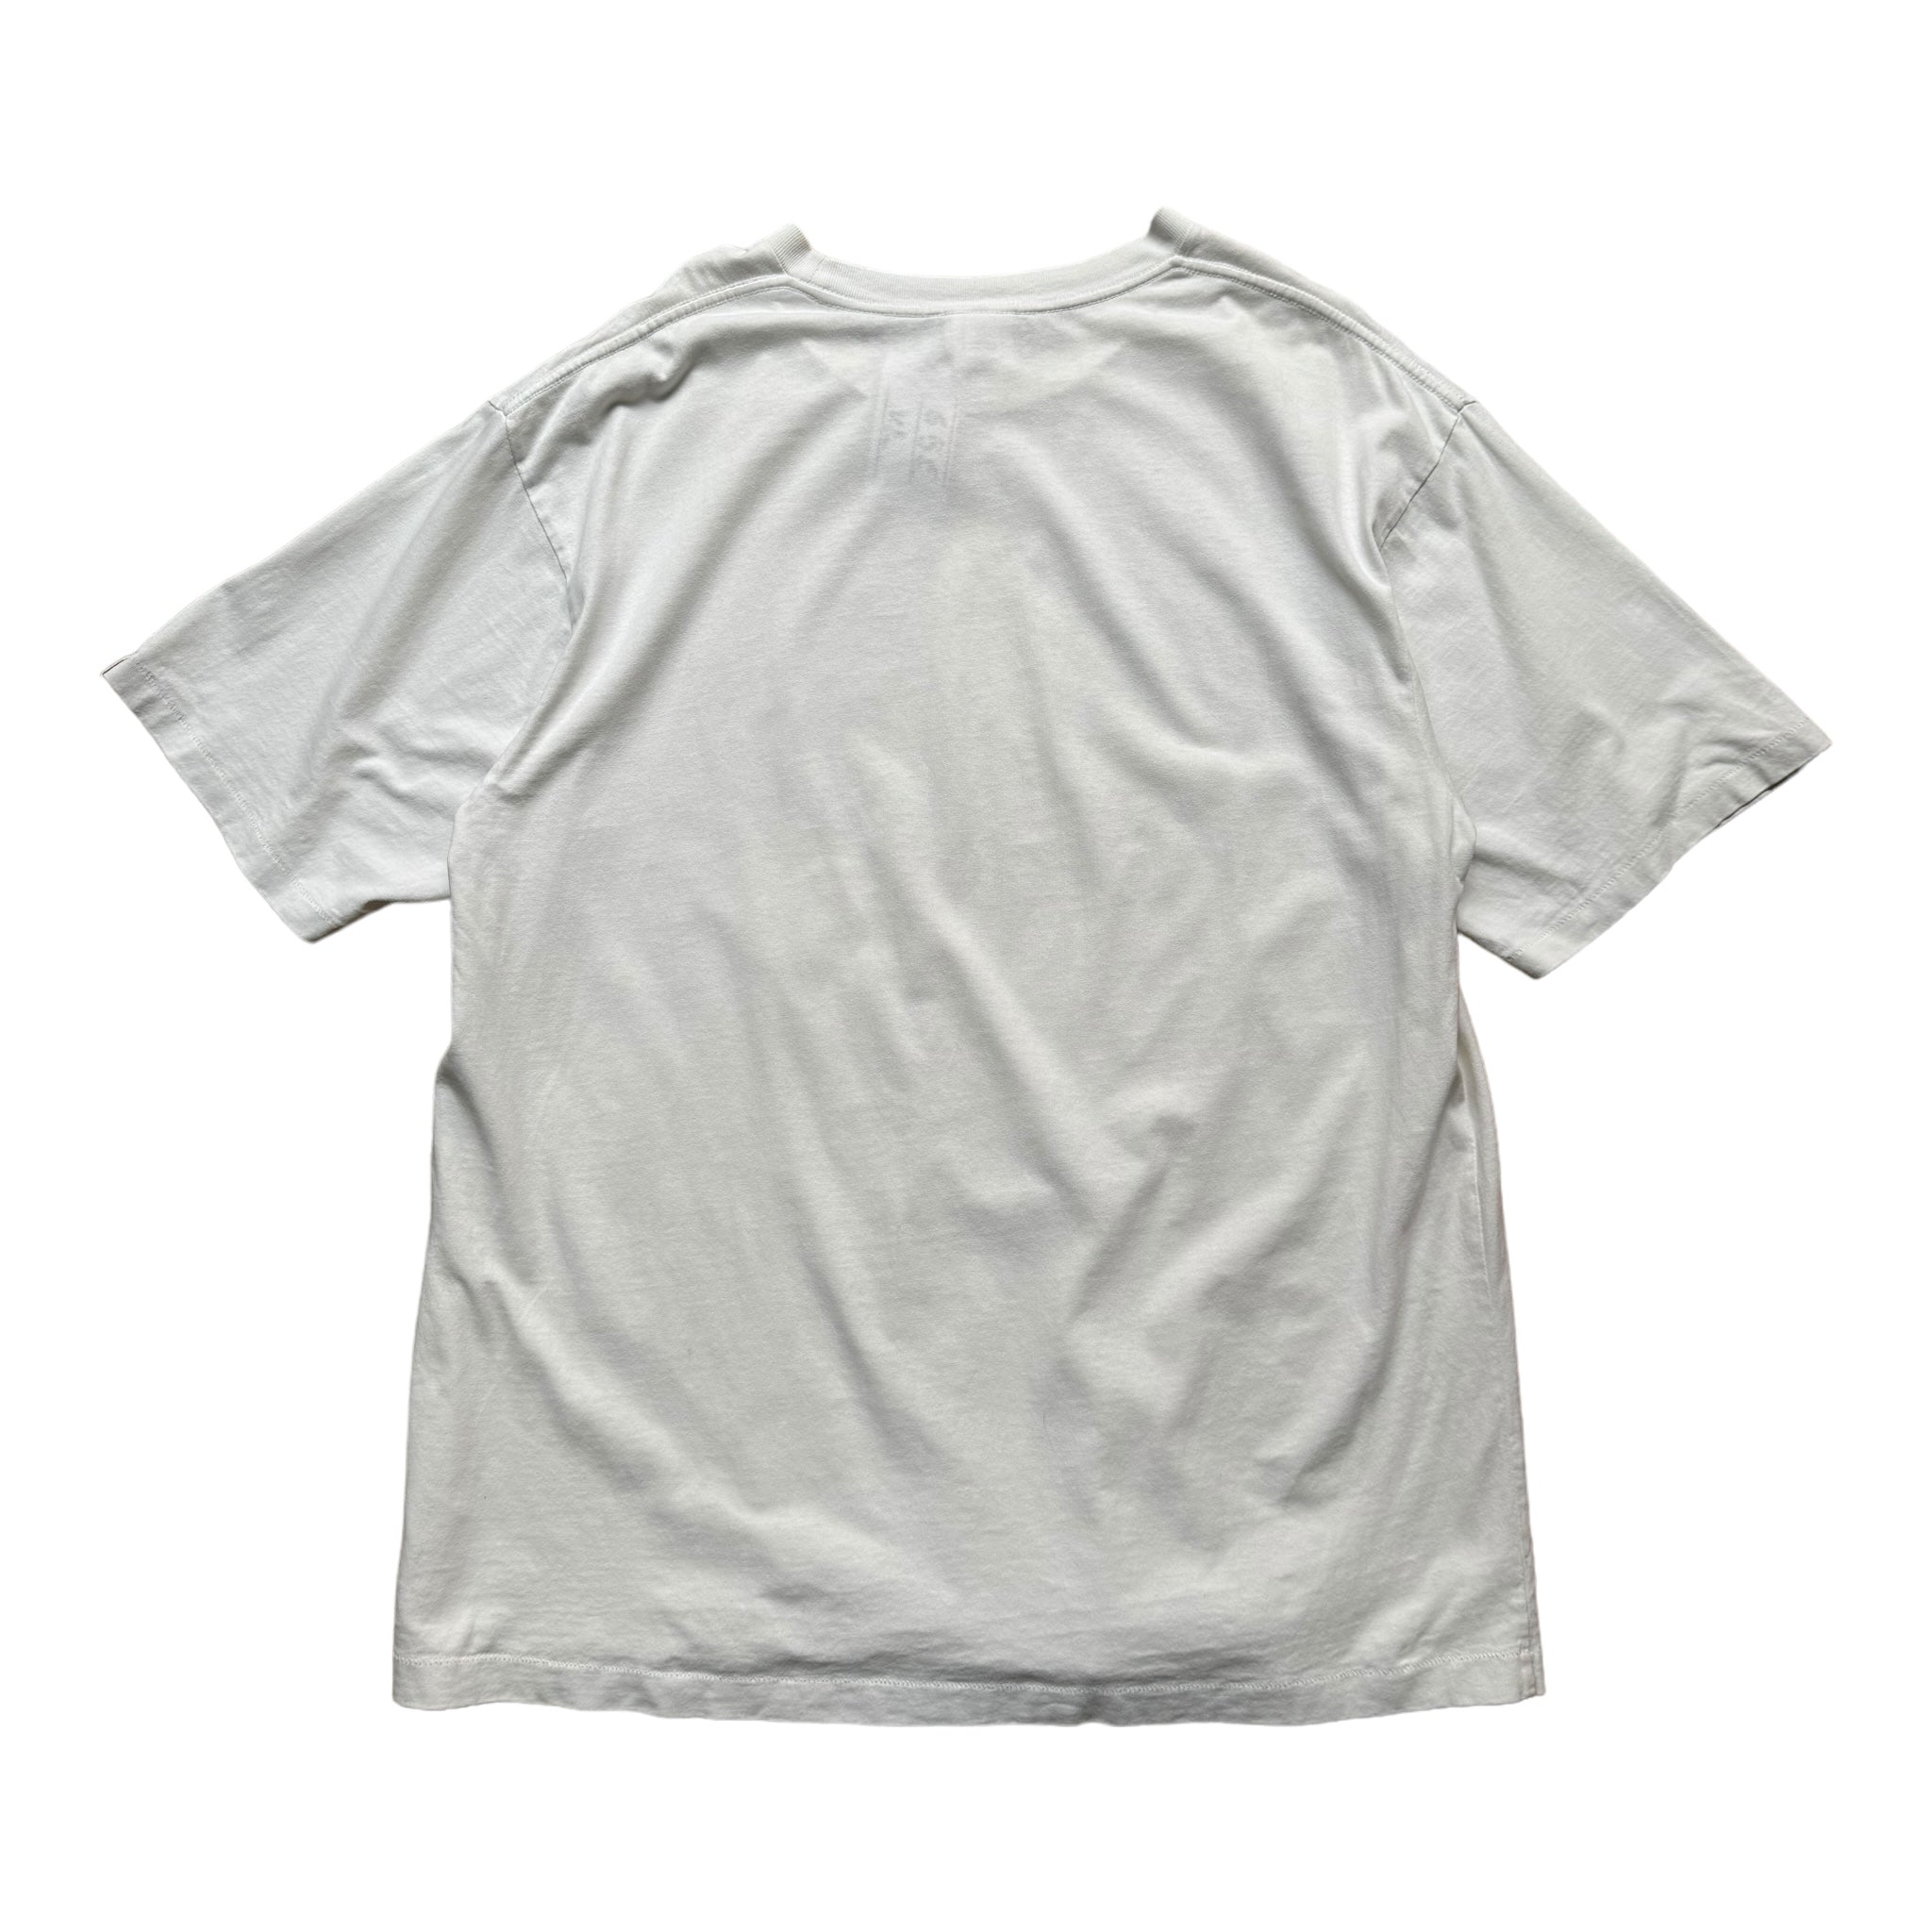 T-shirt Bape vintage (XL)